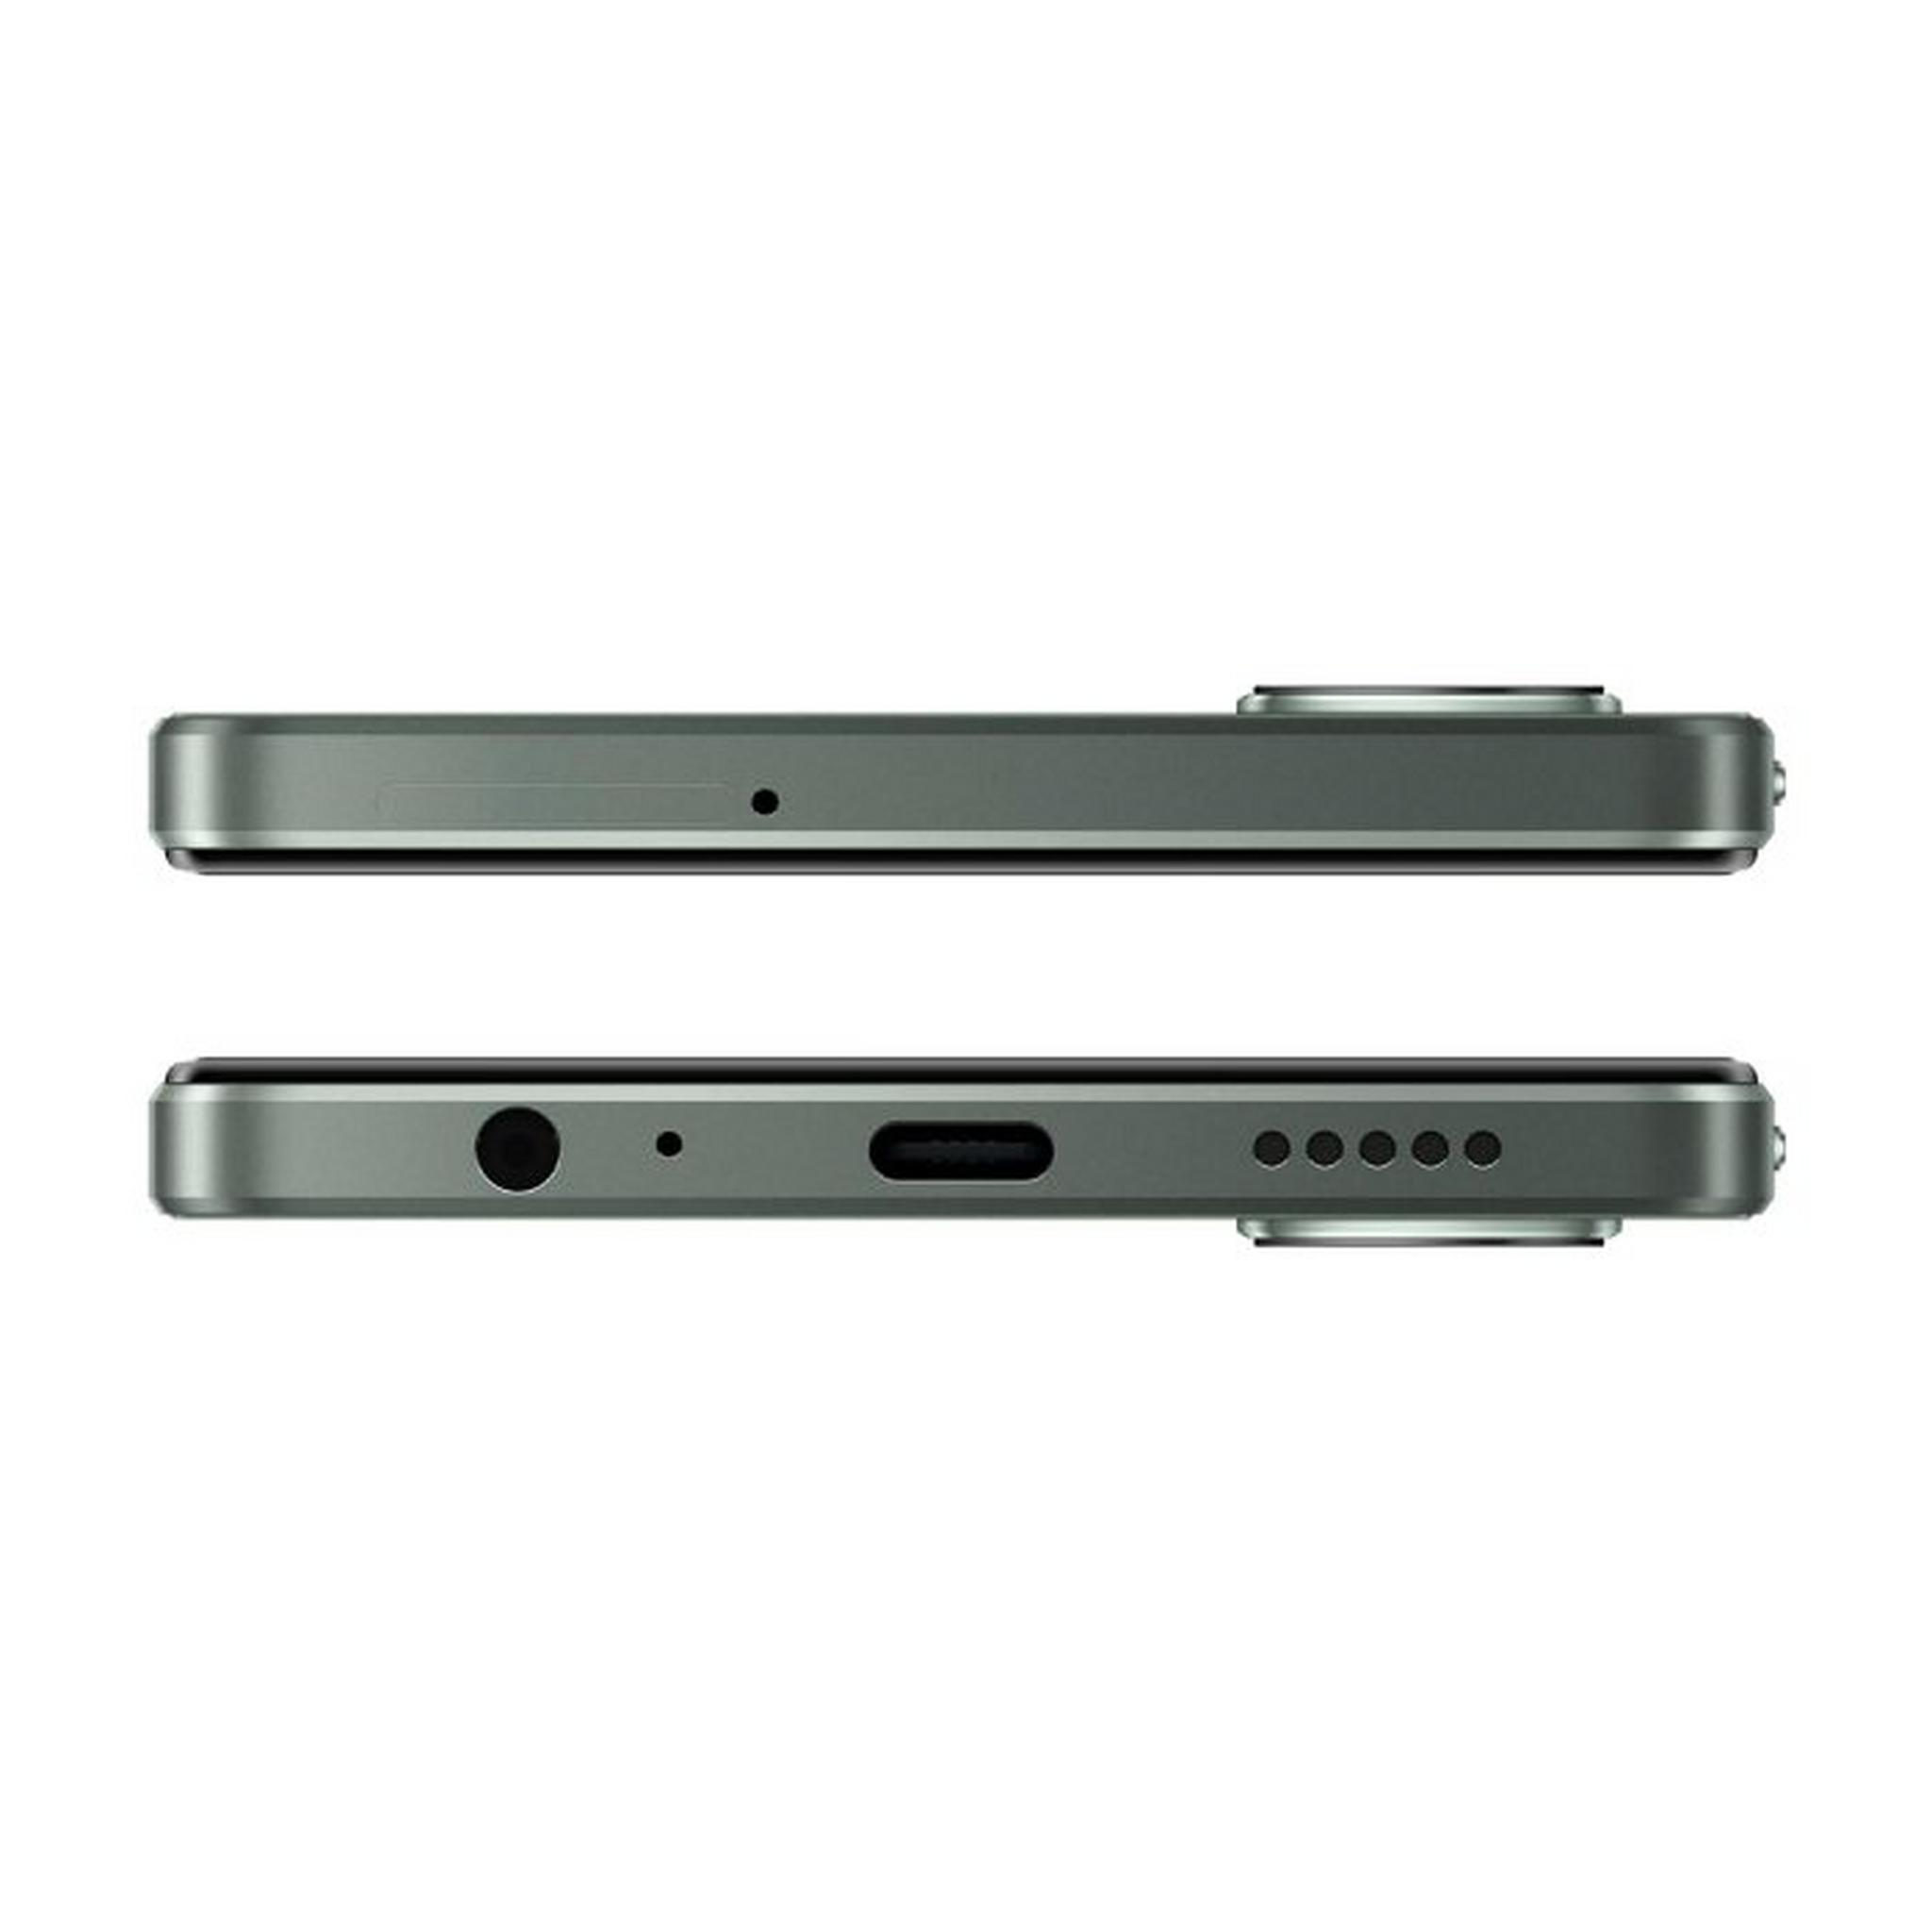 VIVO Y17S Phone, 4GB RAM, 128GB SSD, 6.56-inch – Green